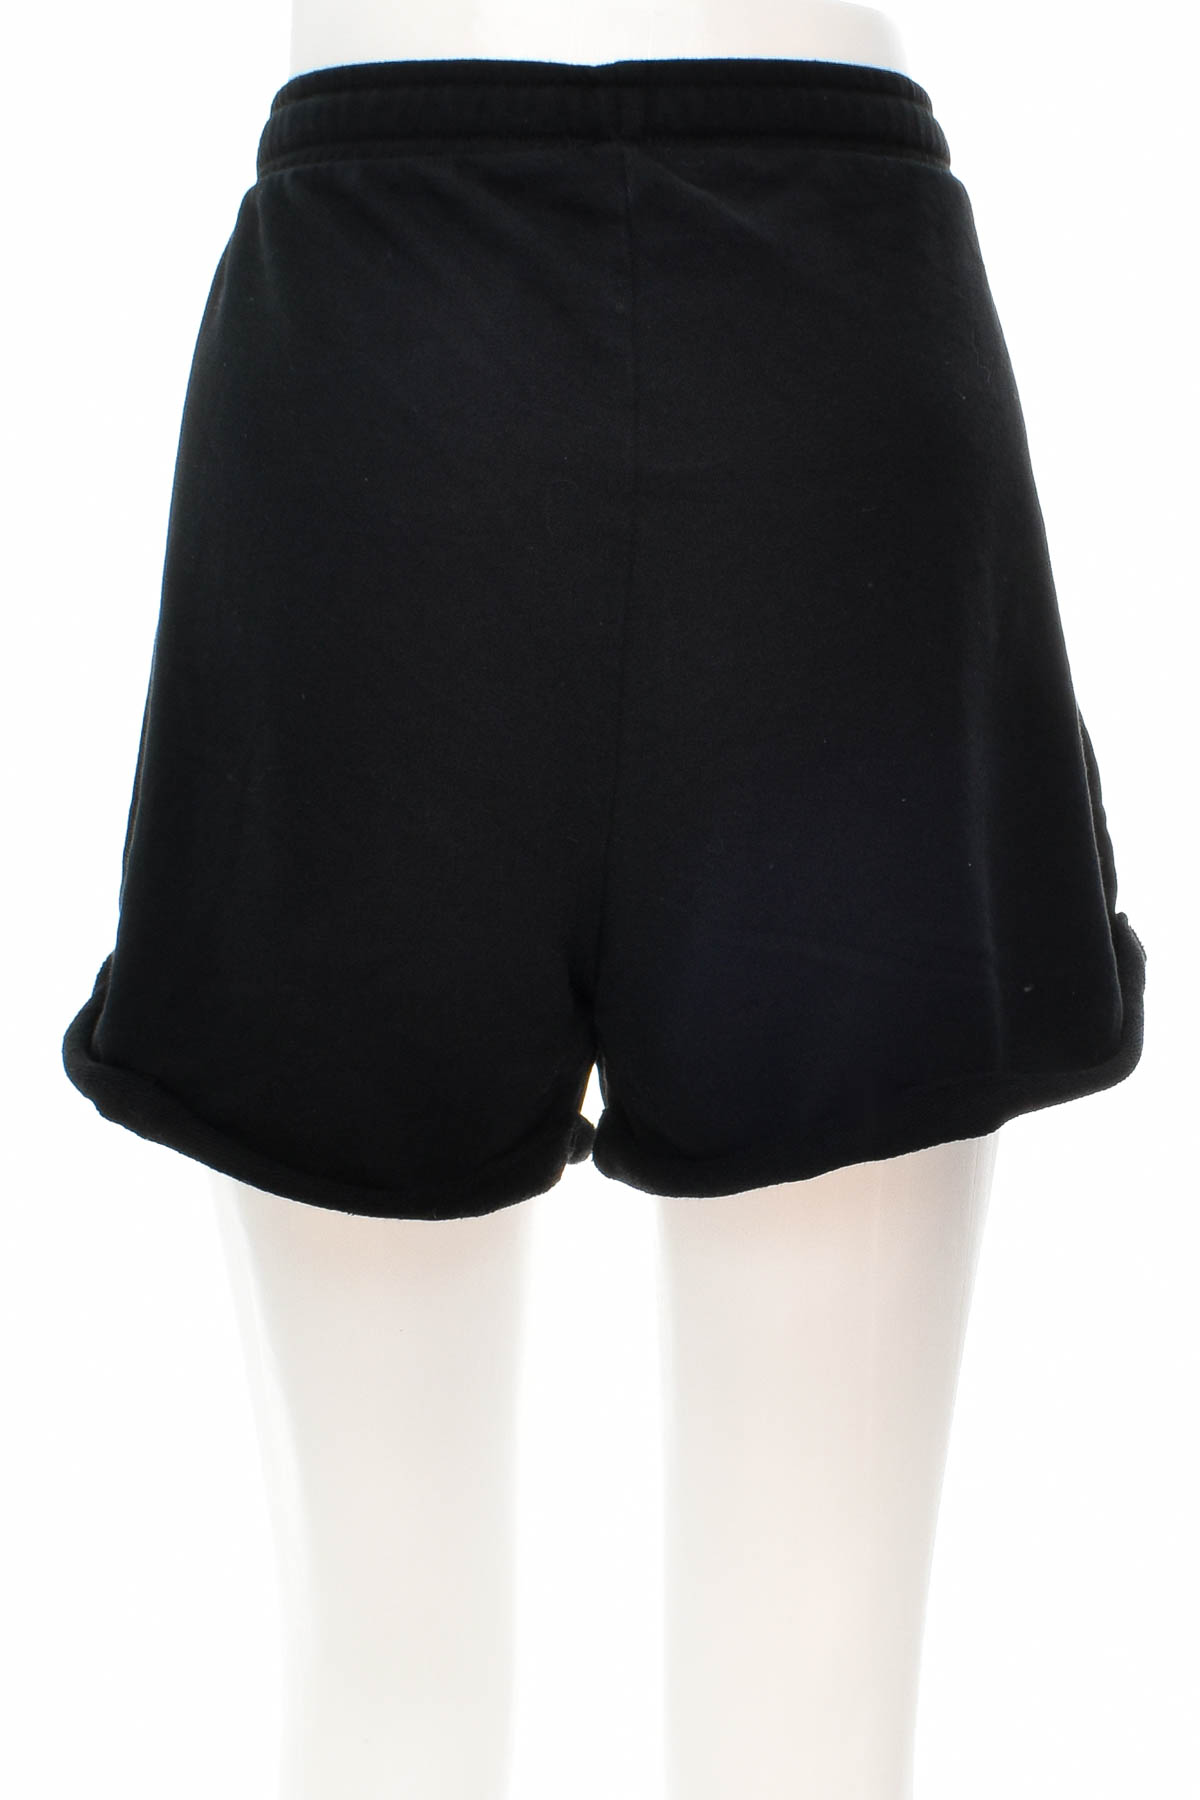 Female shorts - The Basics x C&A - 1